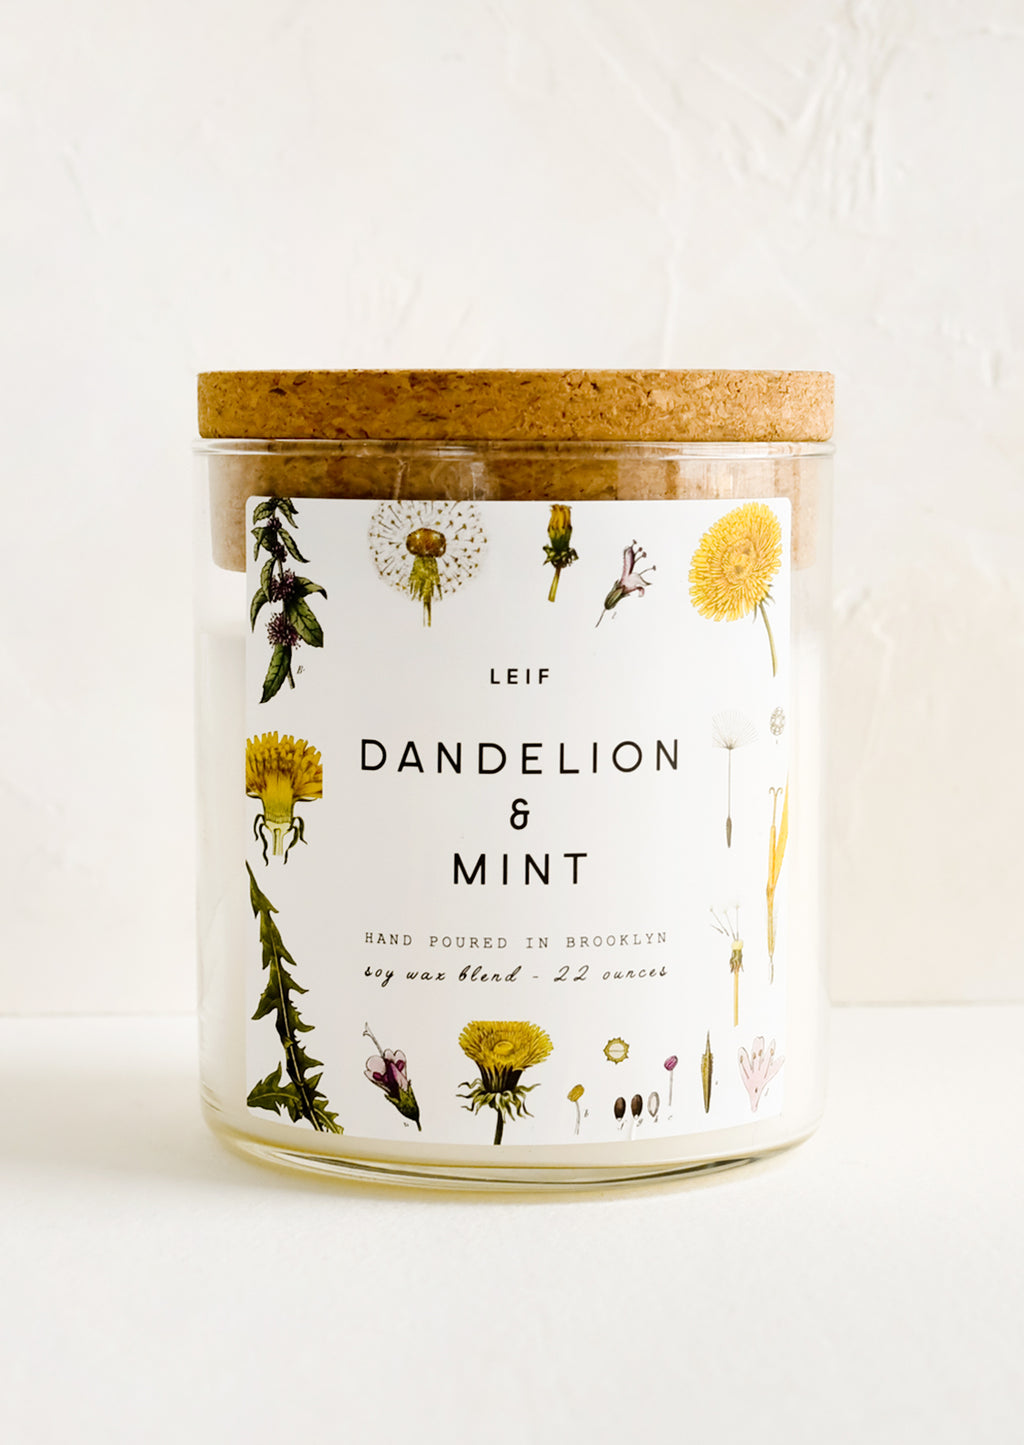 Dandelion & Mint: A glass jar candle in Dandelion & Mint scent with botanical print label.